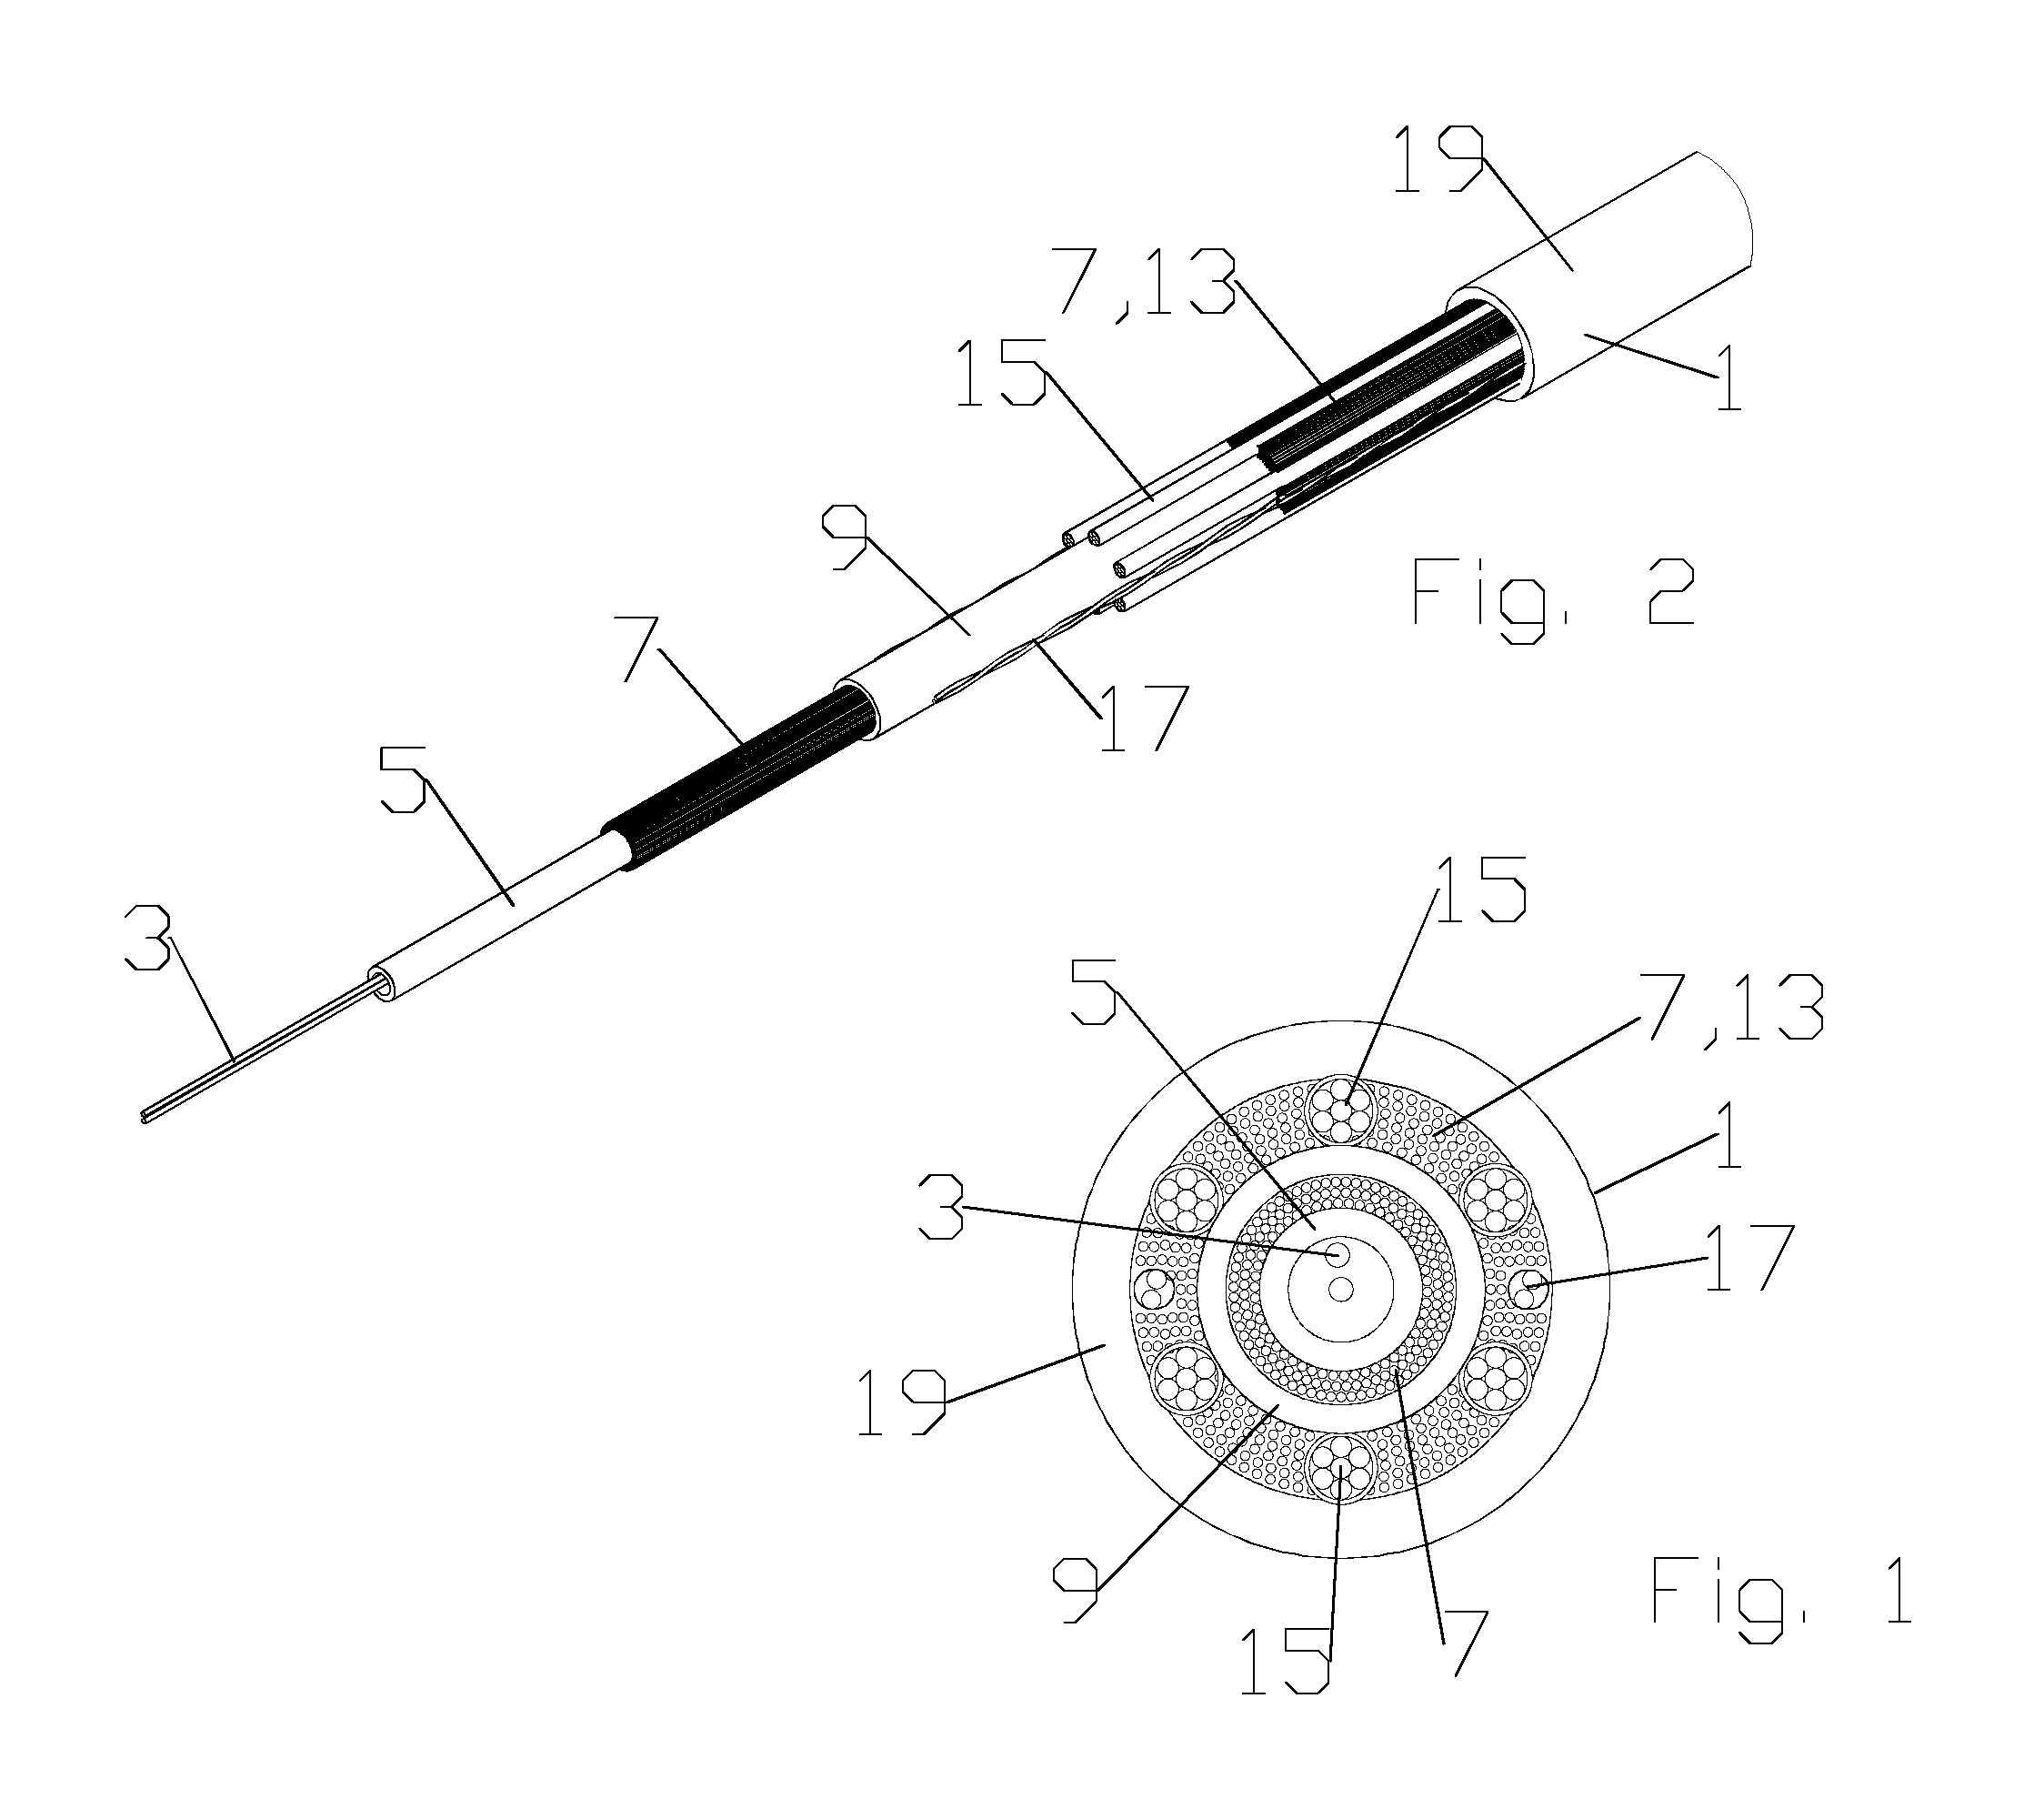 Robust optical crimp connector